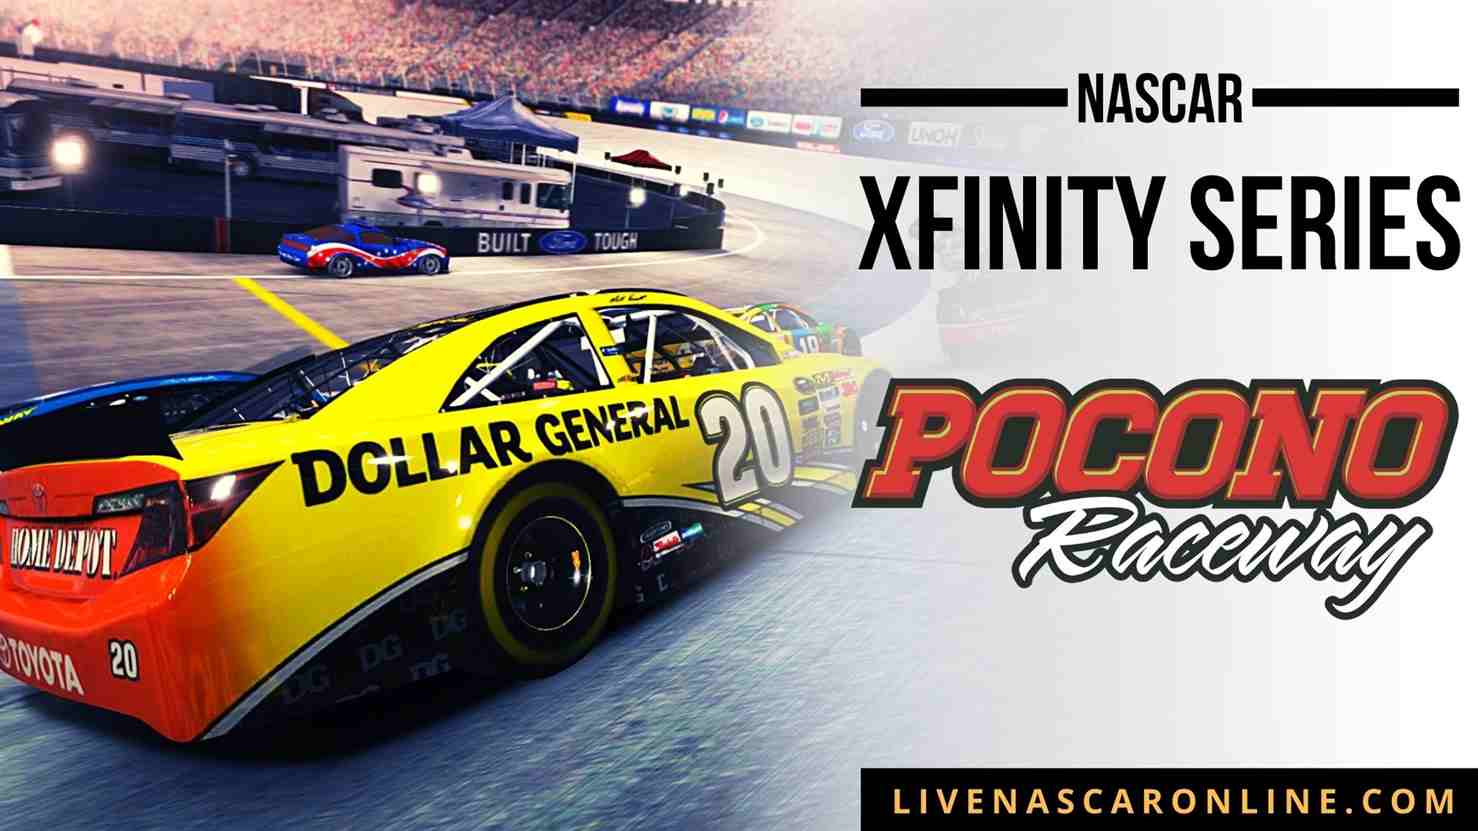 NASCAR Xfinity Pocono Green 225 Live Stream